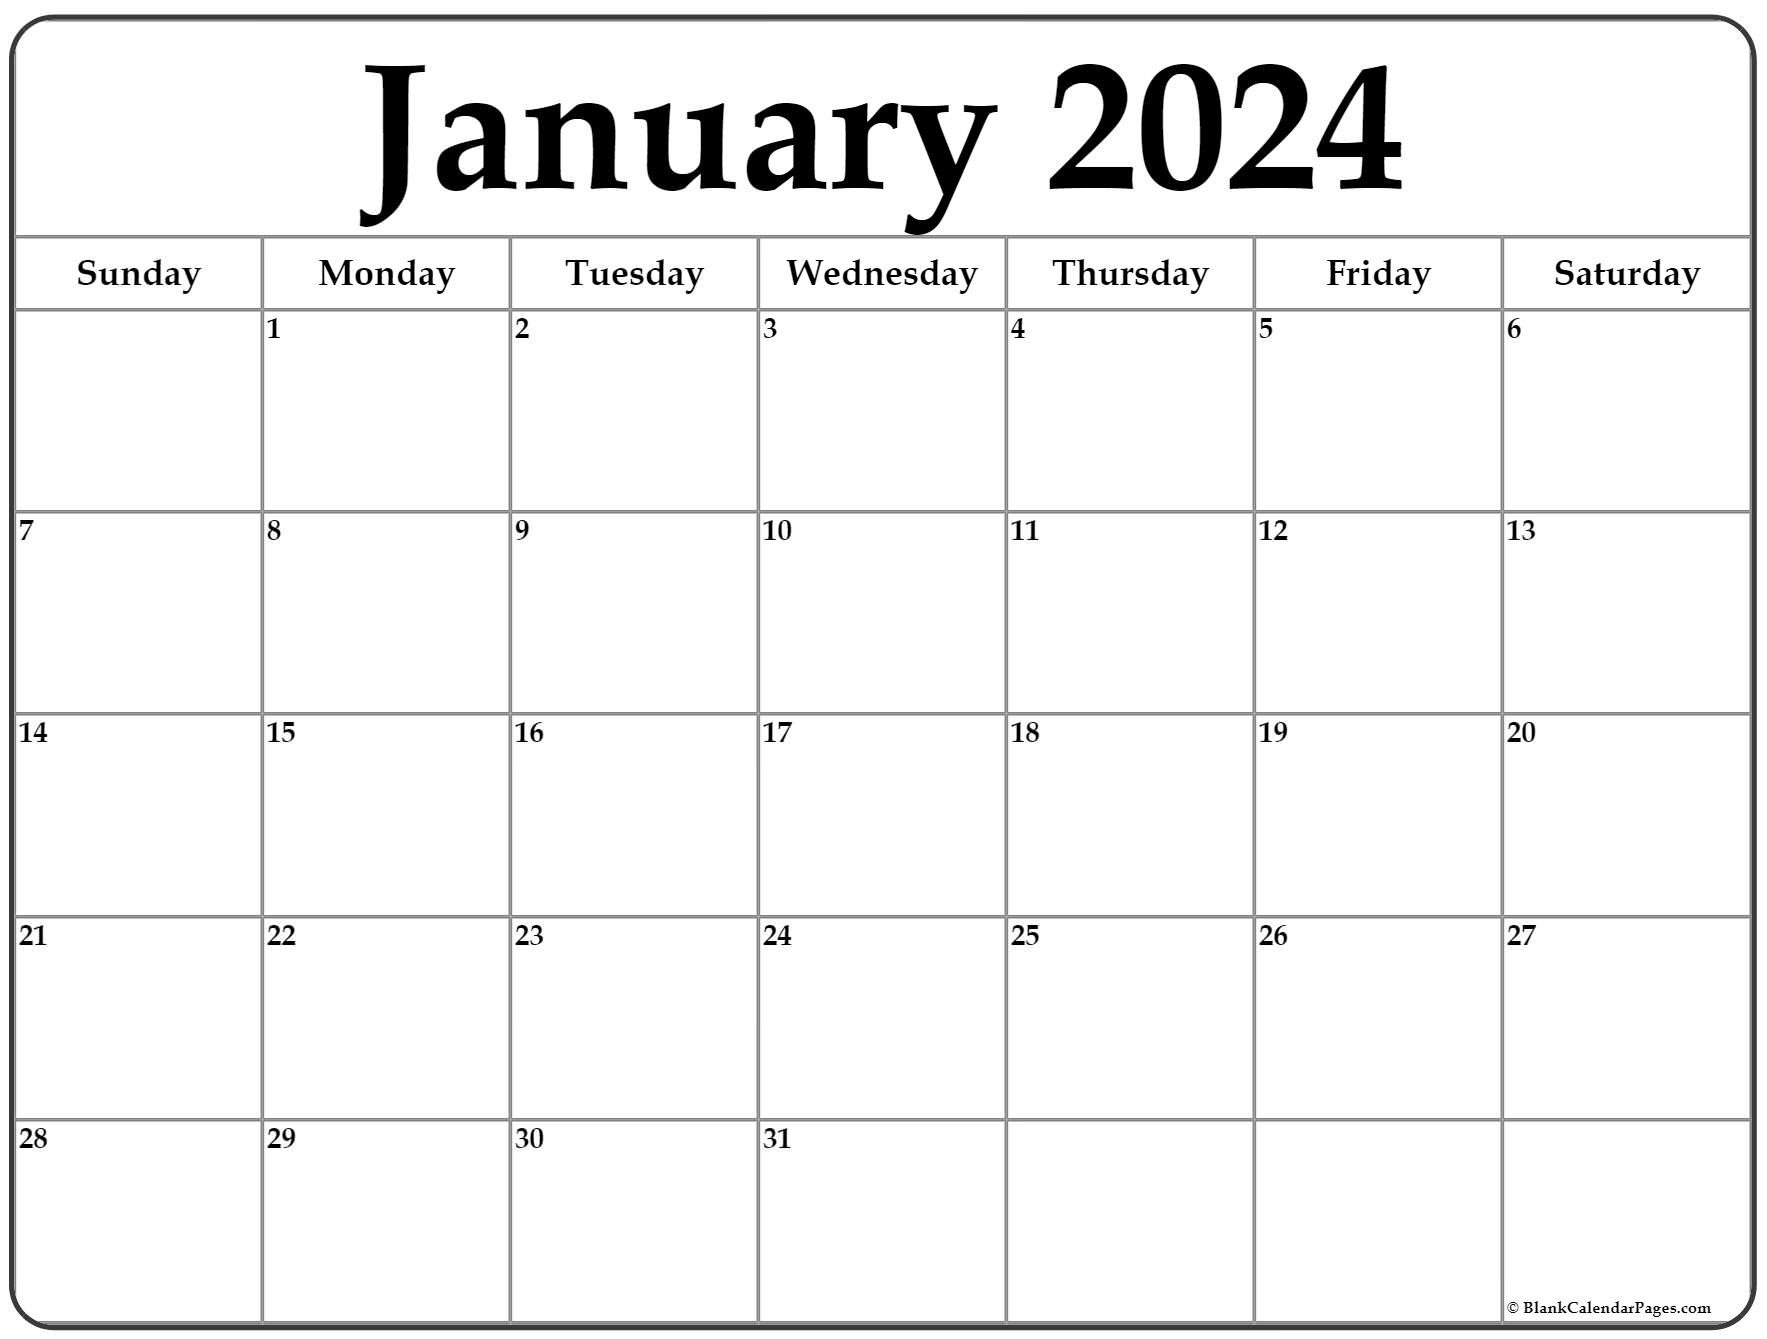 January 2024 Calendar | Free Printable Calendar for Printable Calendar Pages 2024 Free